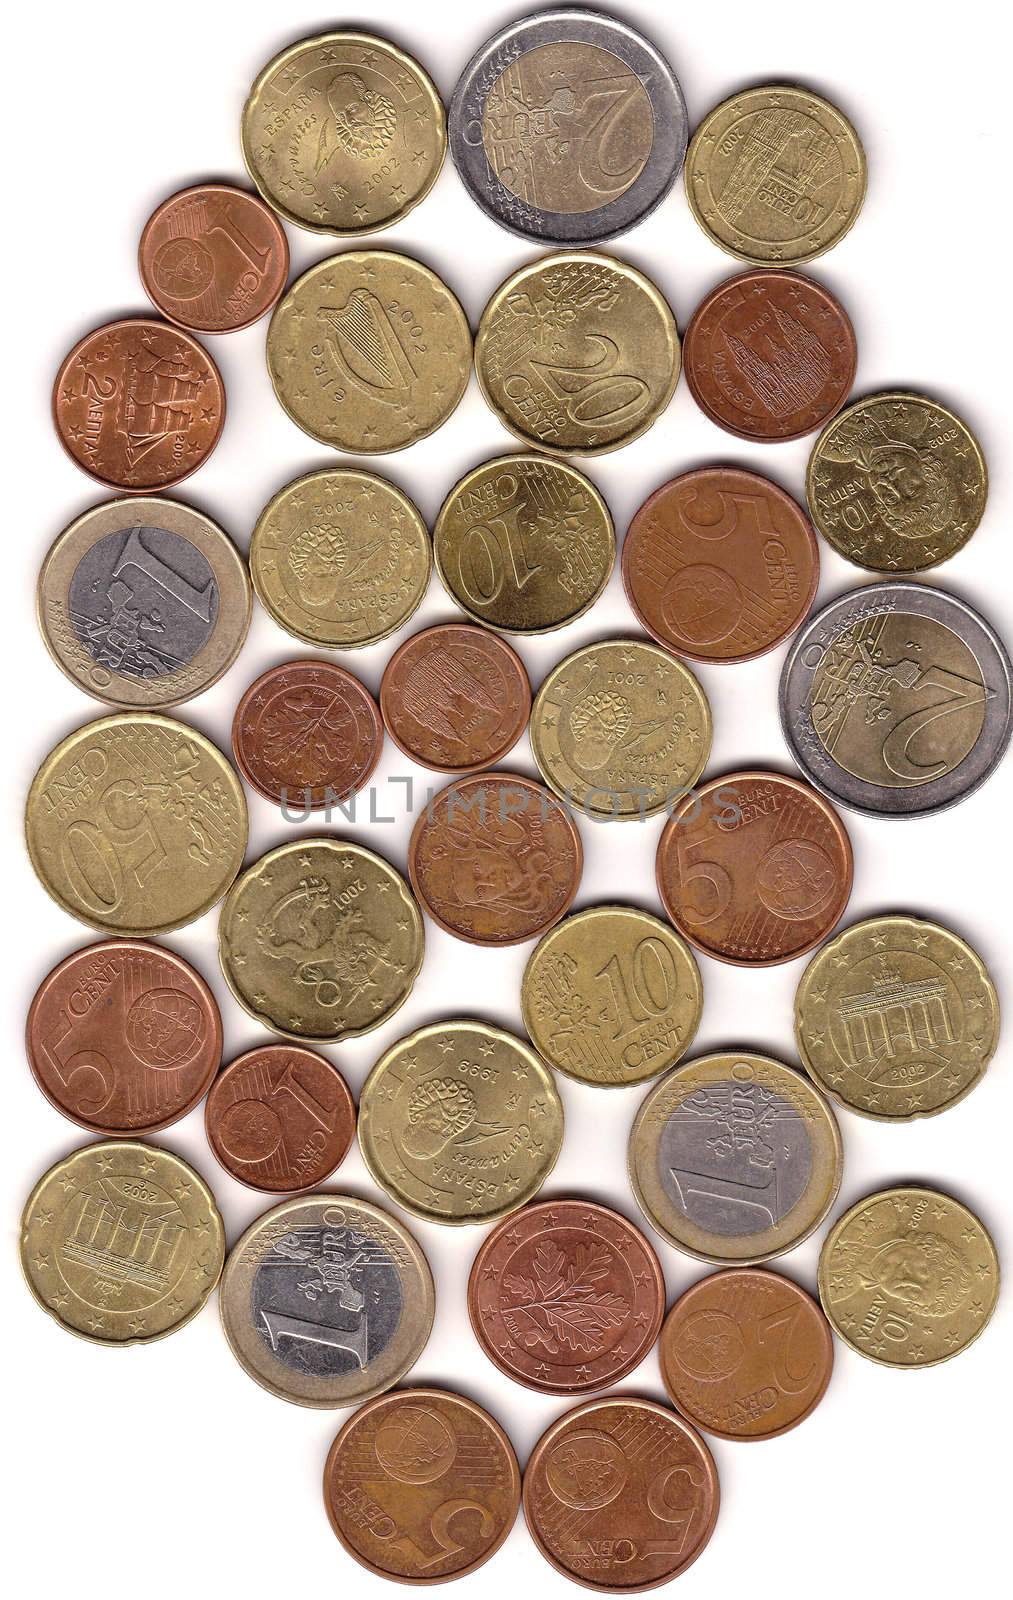 euro coins by viviolsen